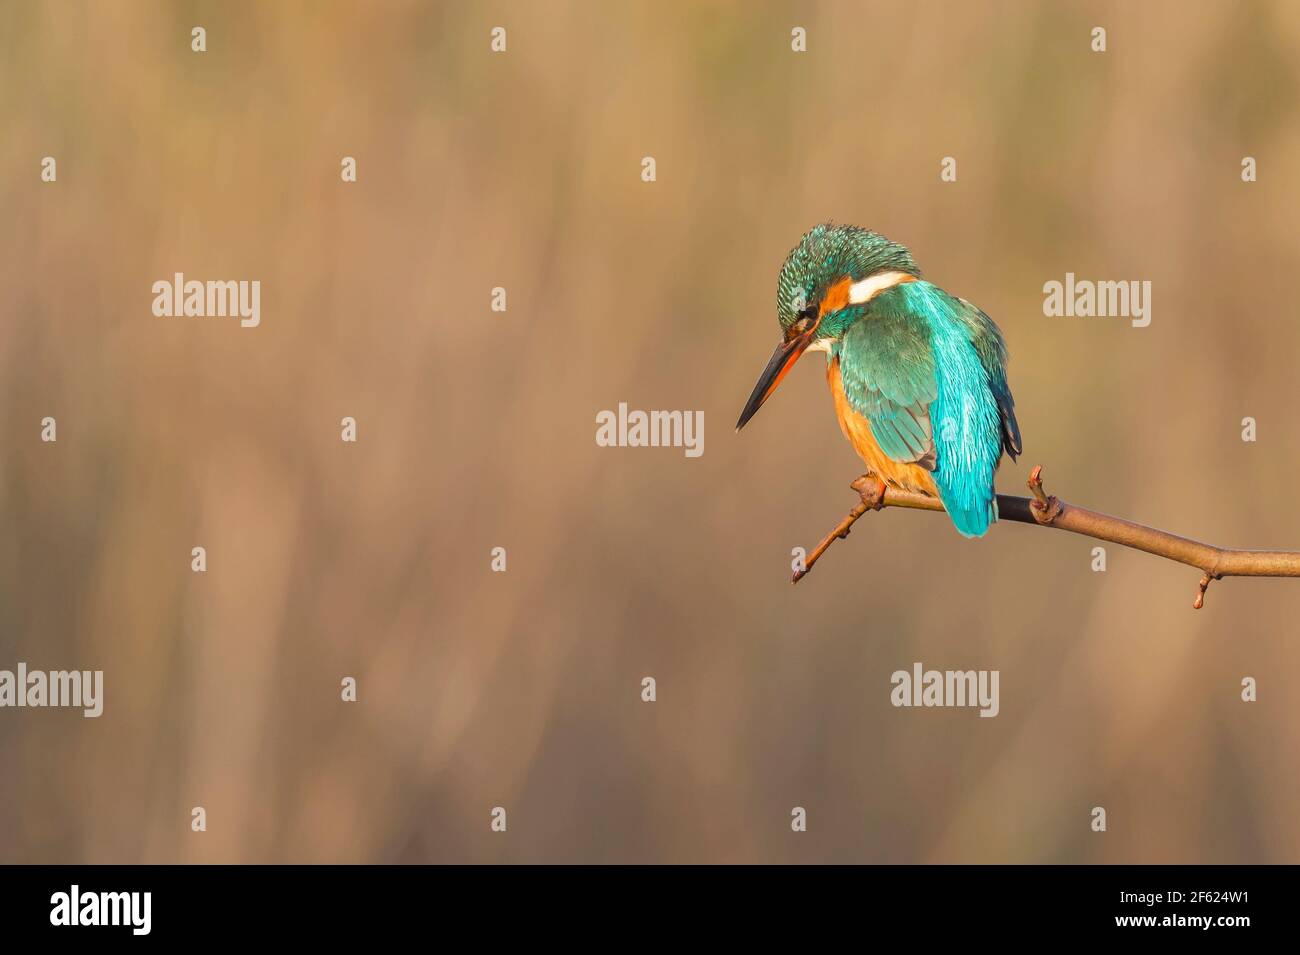 Alcedo Ateste Kingfisher Foto de stock